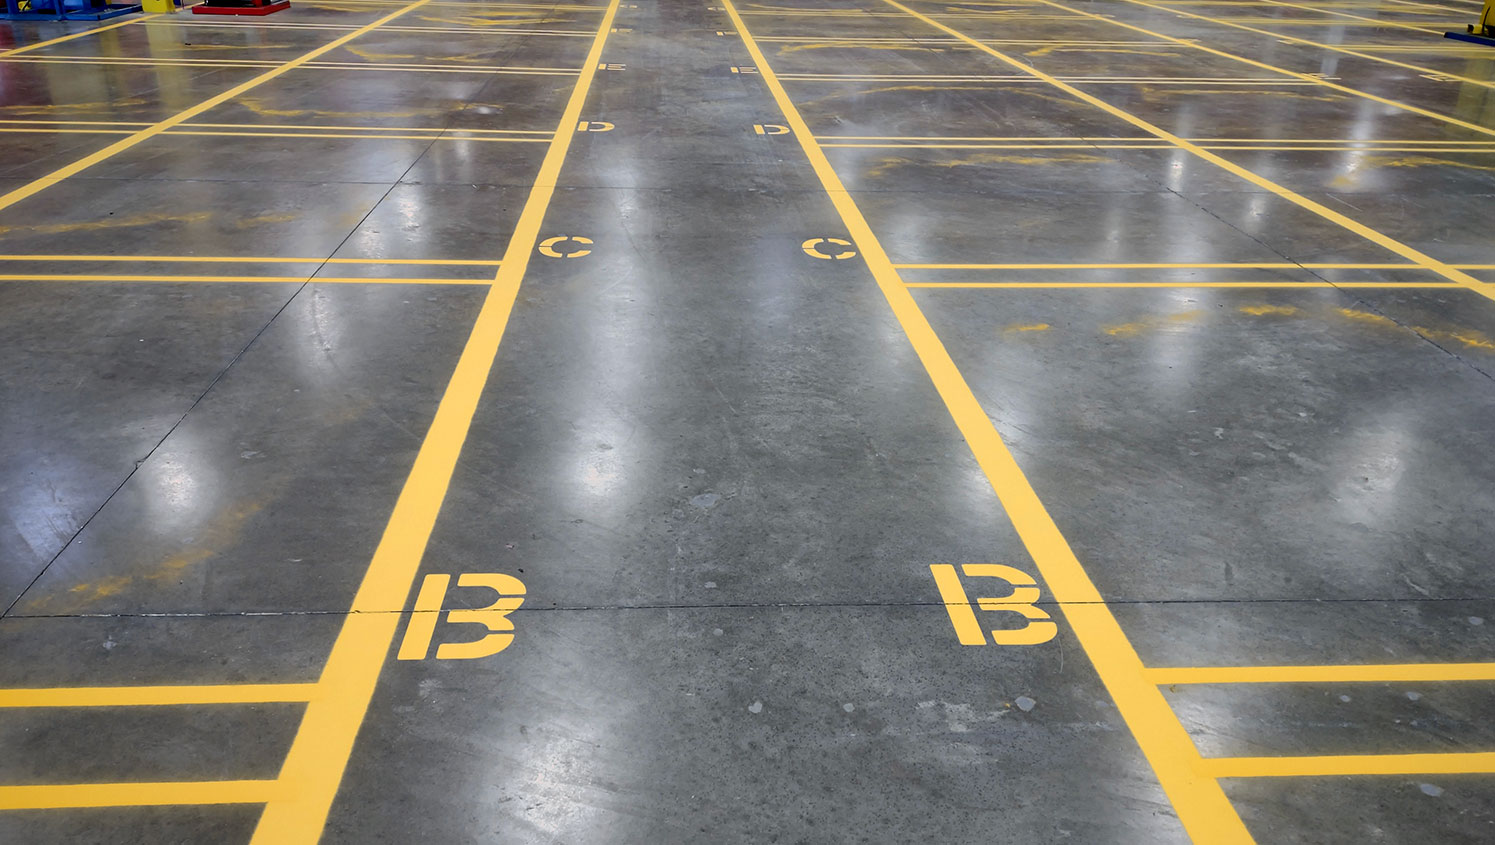 lighting company warehouse markings